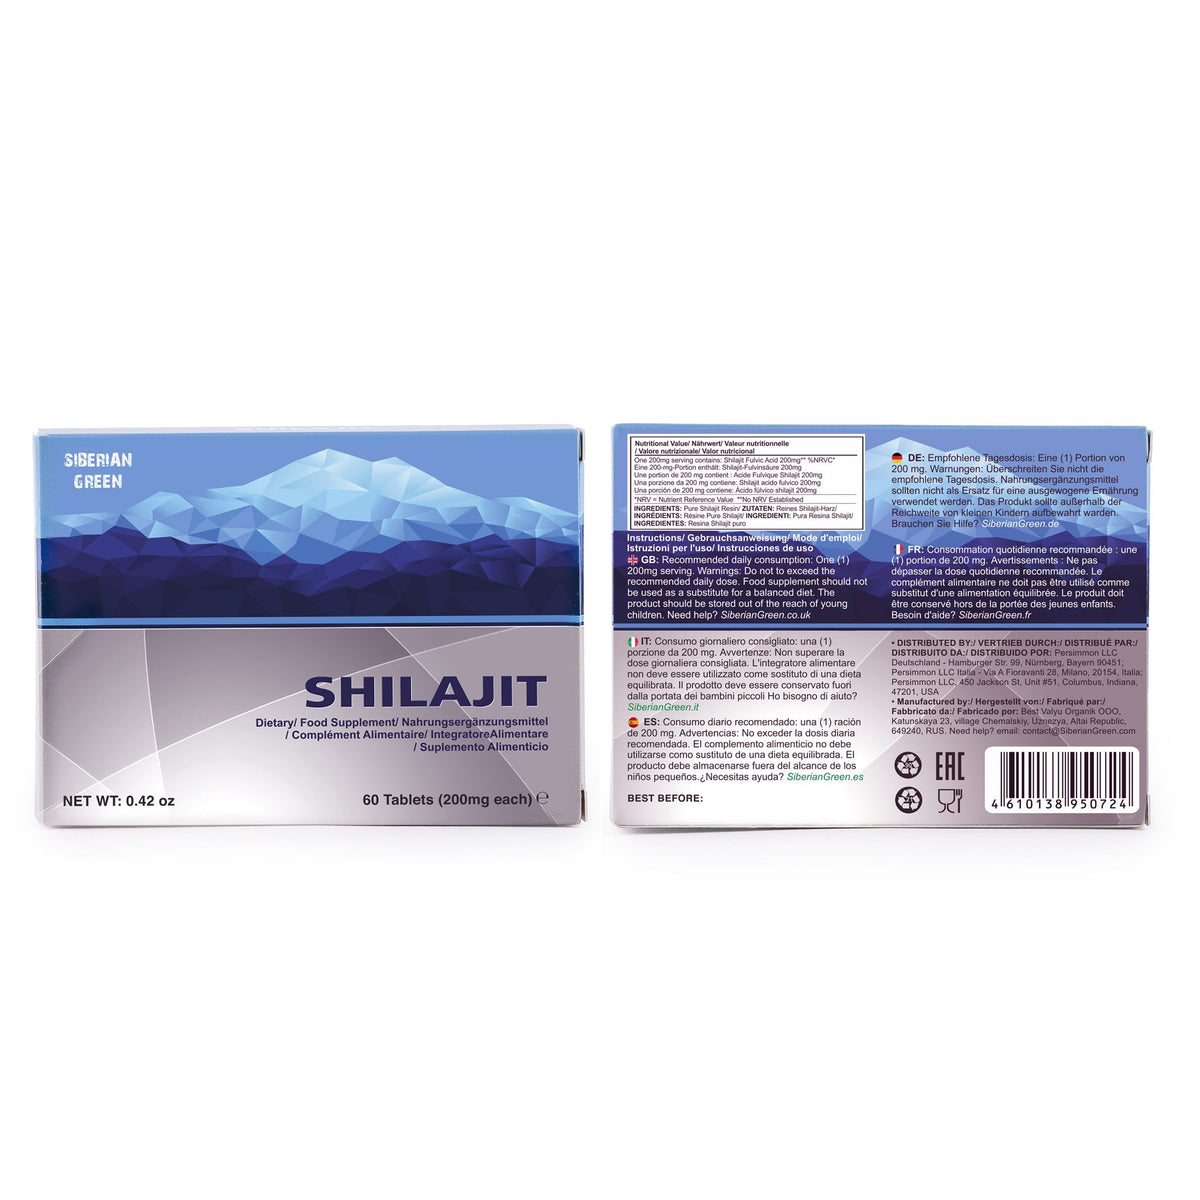 120 (2x60 Pack) Altaic Pure Shilajit Blue Mountains "MUMIJO" Mumio Mumiyo Resin